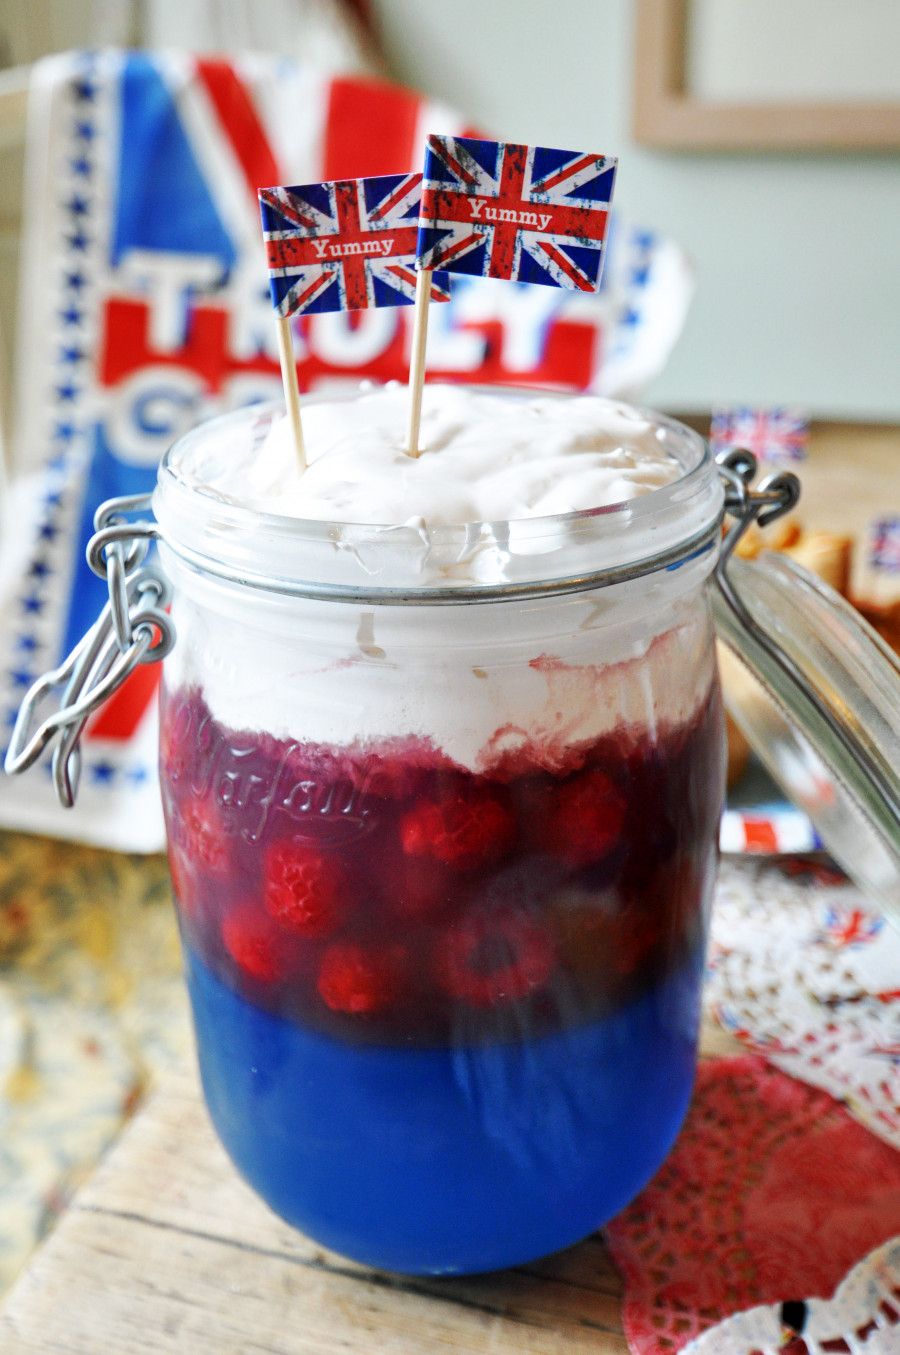 Jelly in a jar by Nadia Sawalha